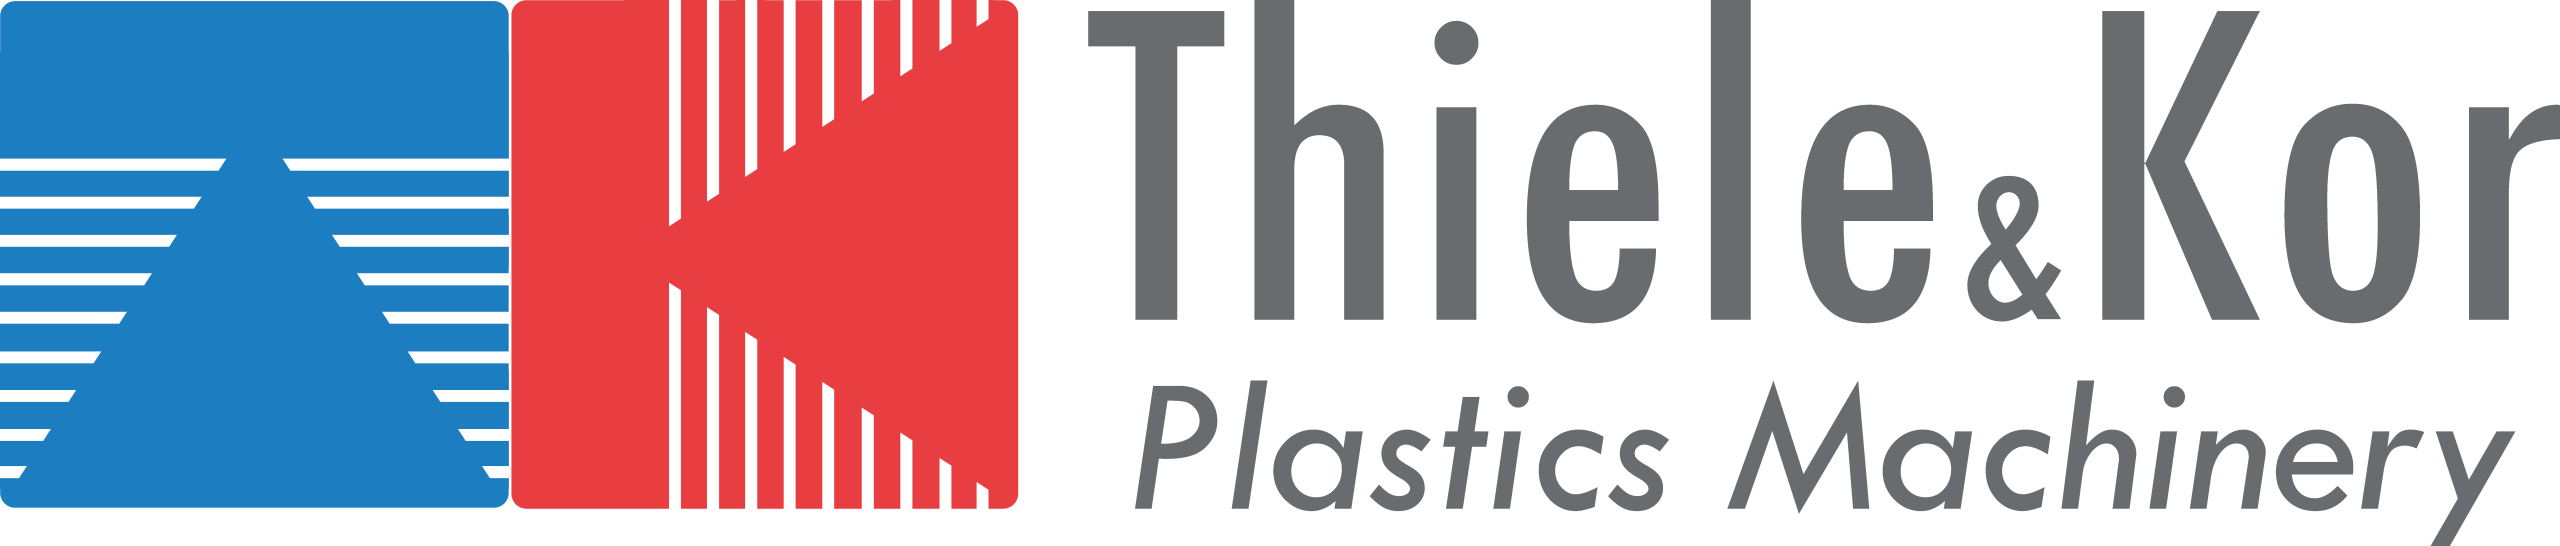 Thiele&Kor Plastics Machinery BV